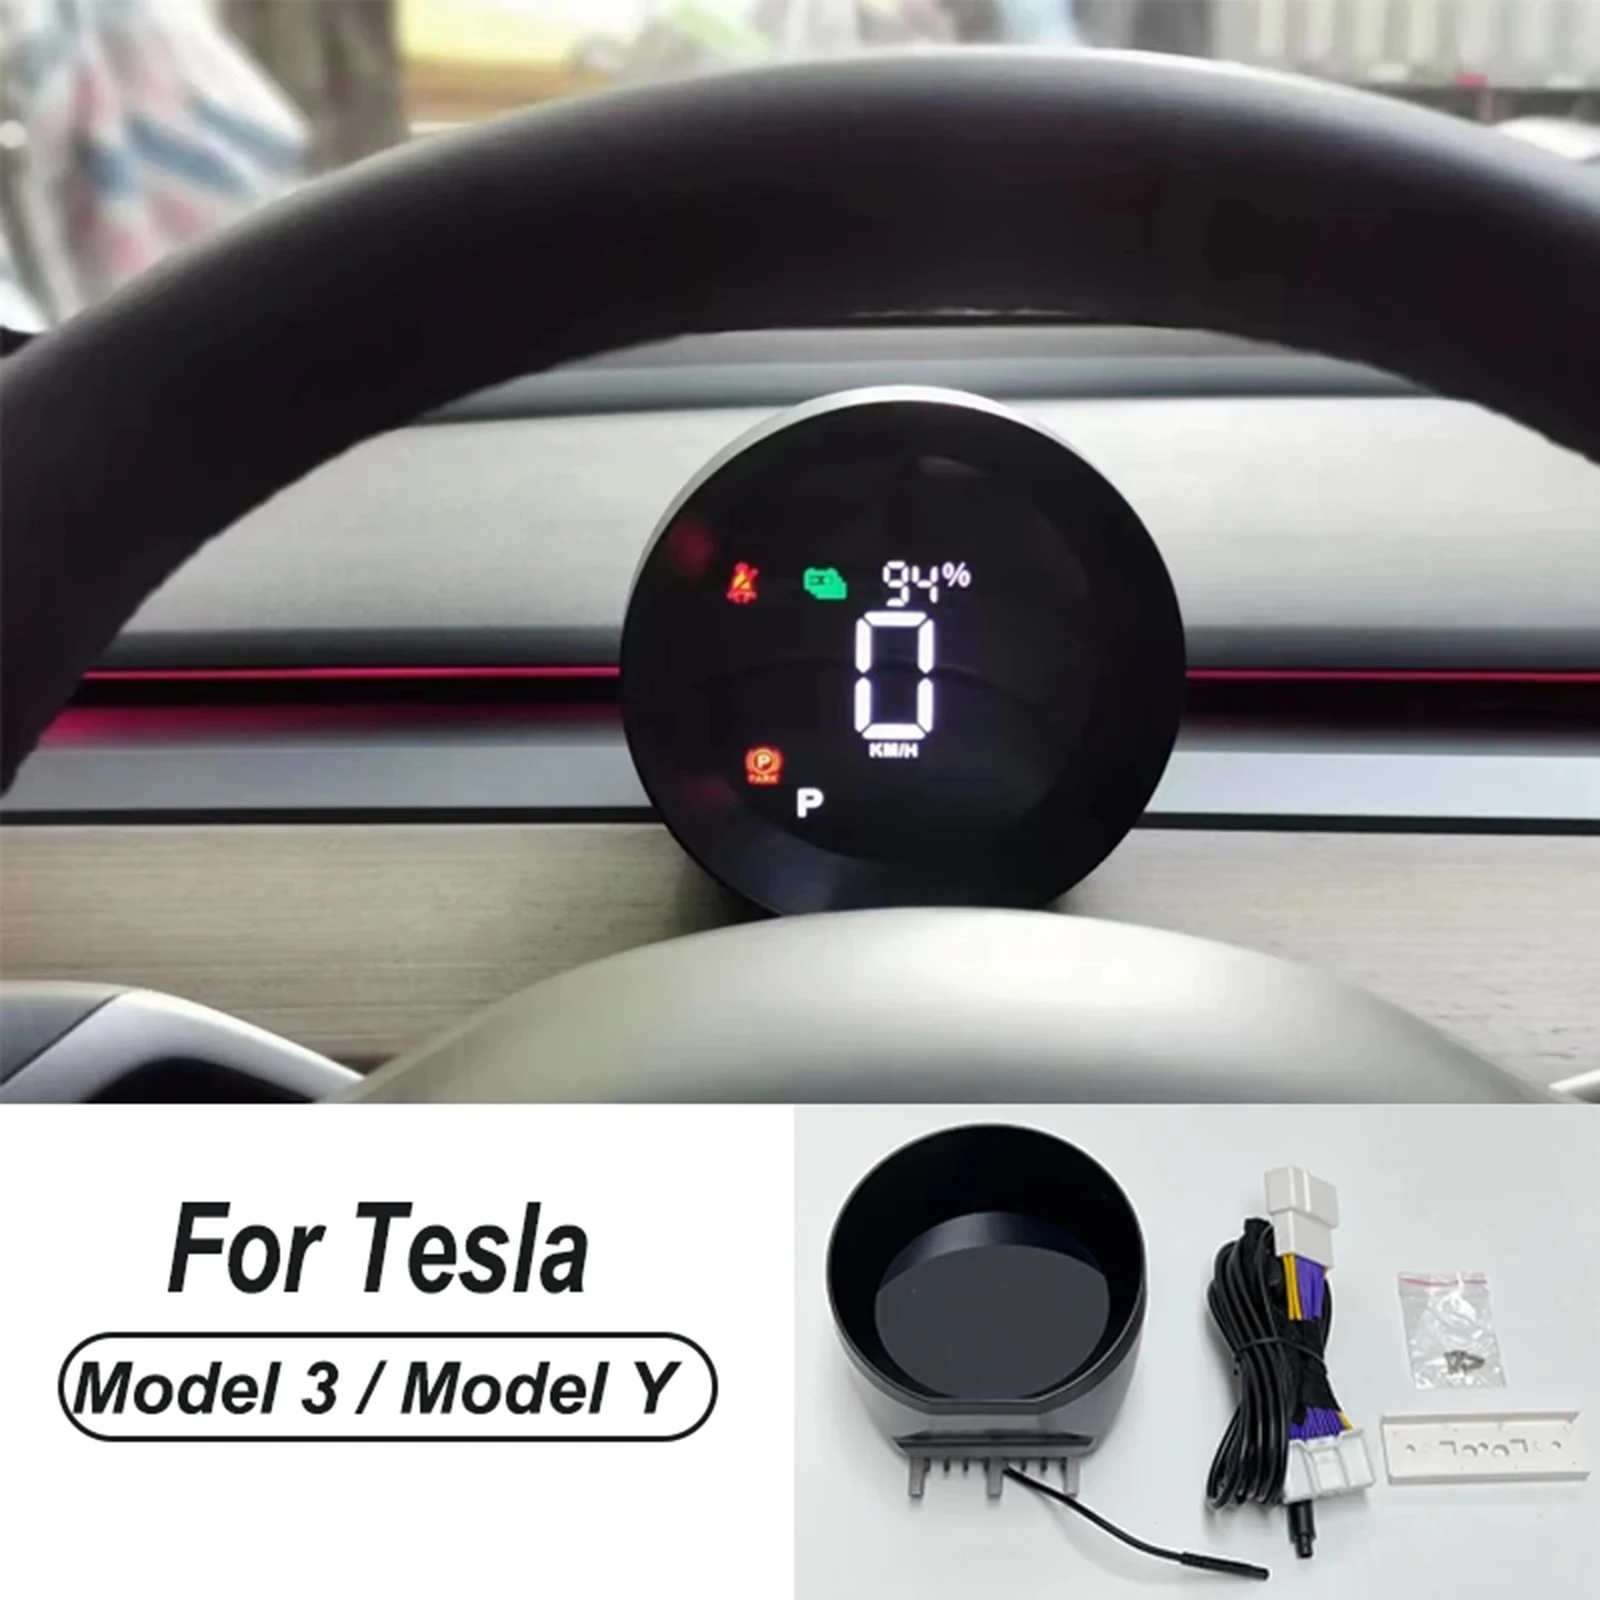 4.3inch Car HUD Display LCD Dashboard Display Speedometer Instrument for Tesla Mode 3 Model Y Intelligent on-board Computer